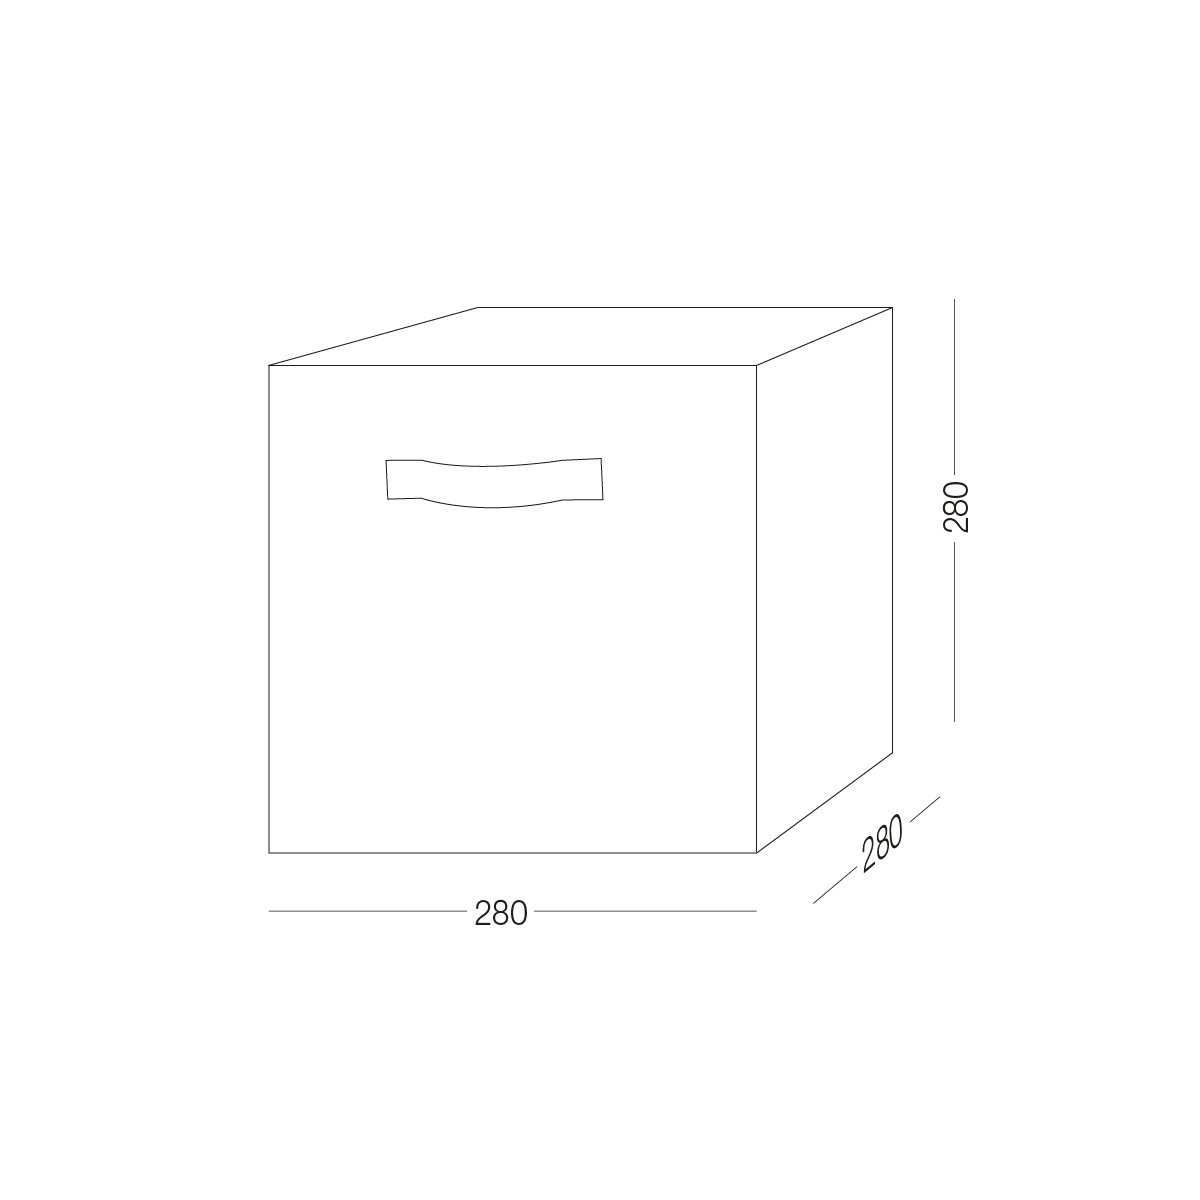 Ящик для хранения МВМ My Home текстильный, 280x280x280 мм, серый (TH-08 GRAY) - фото 9